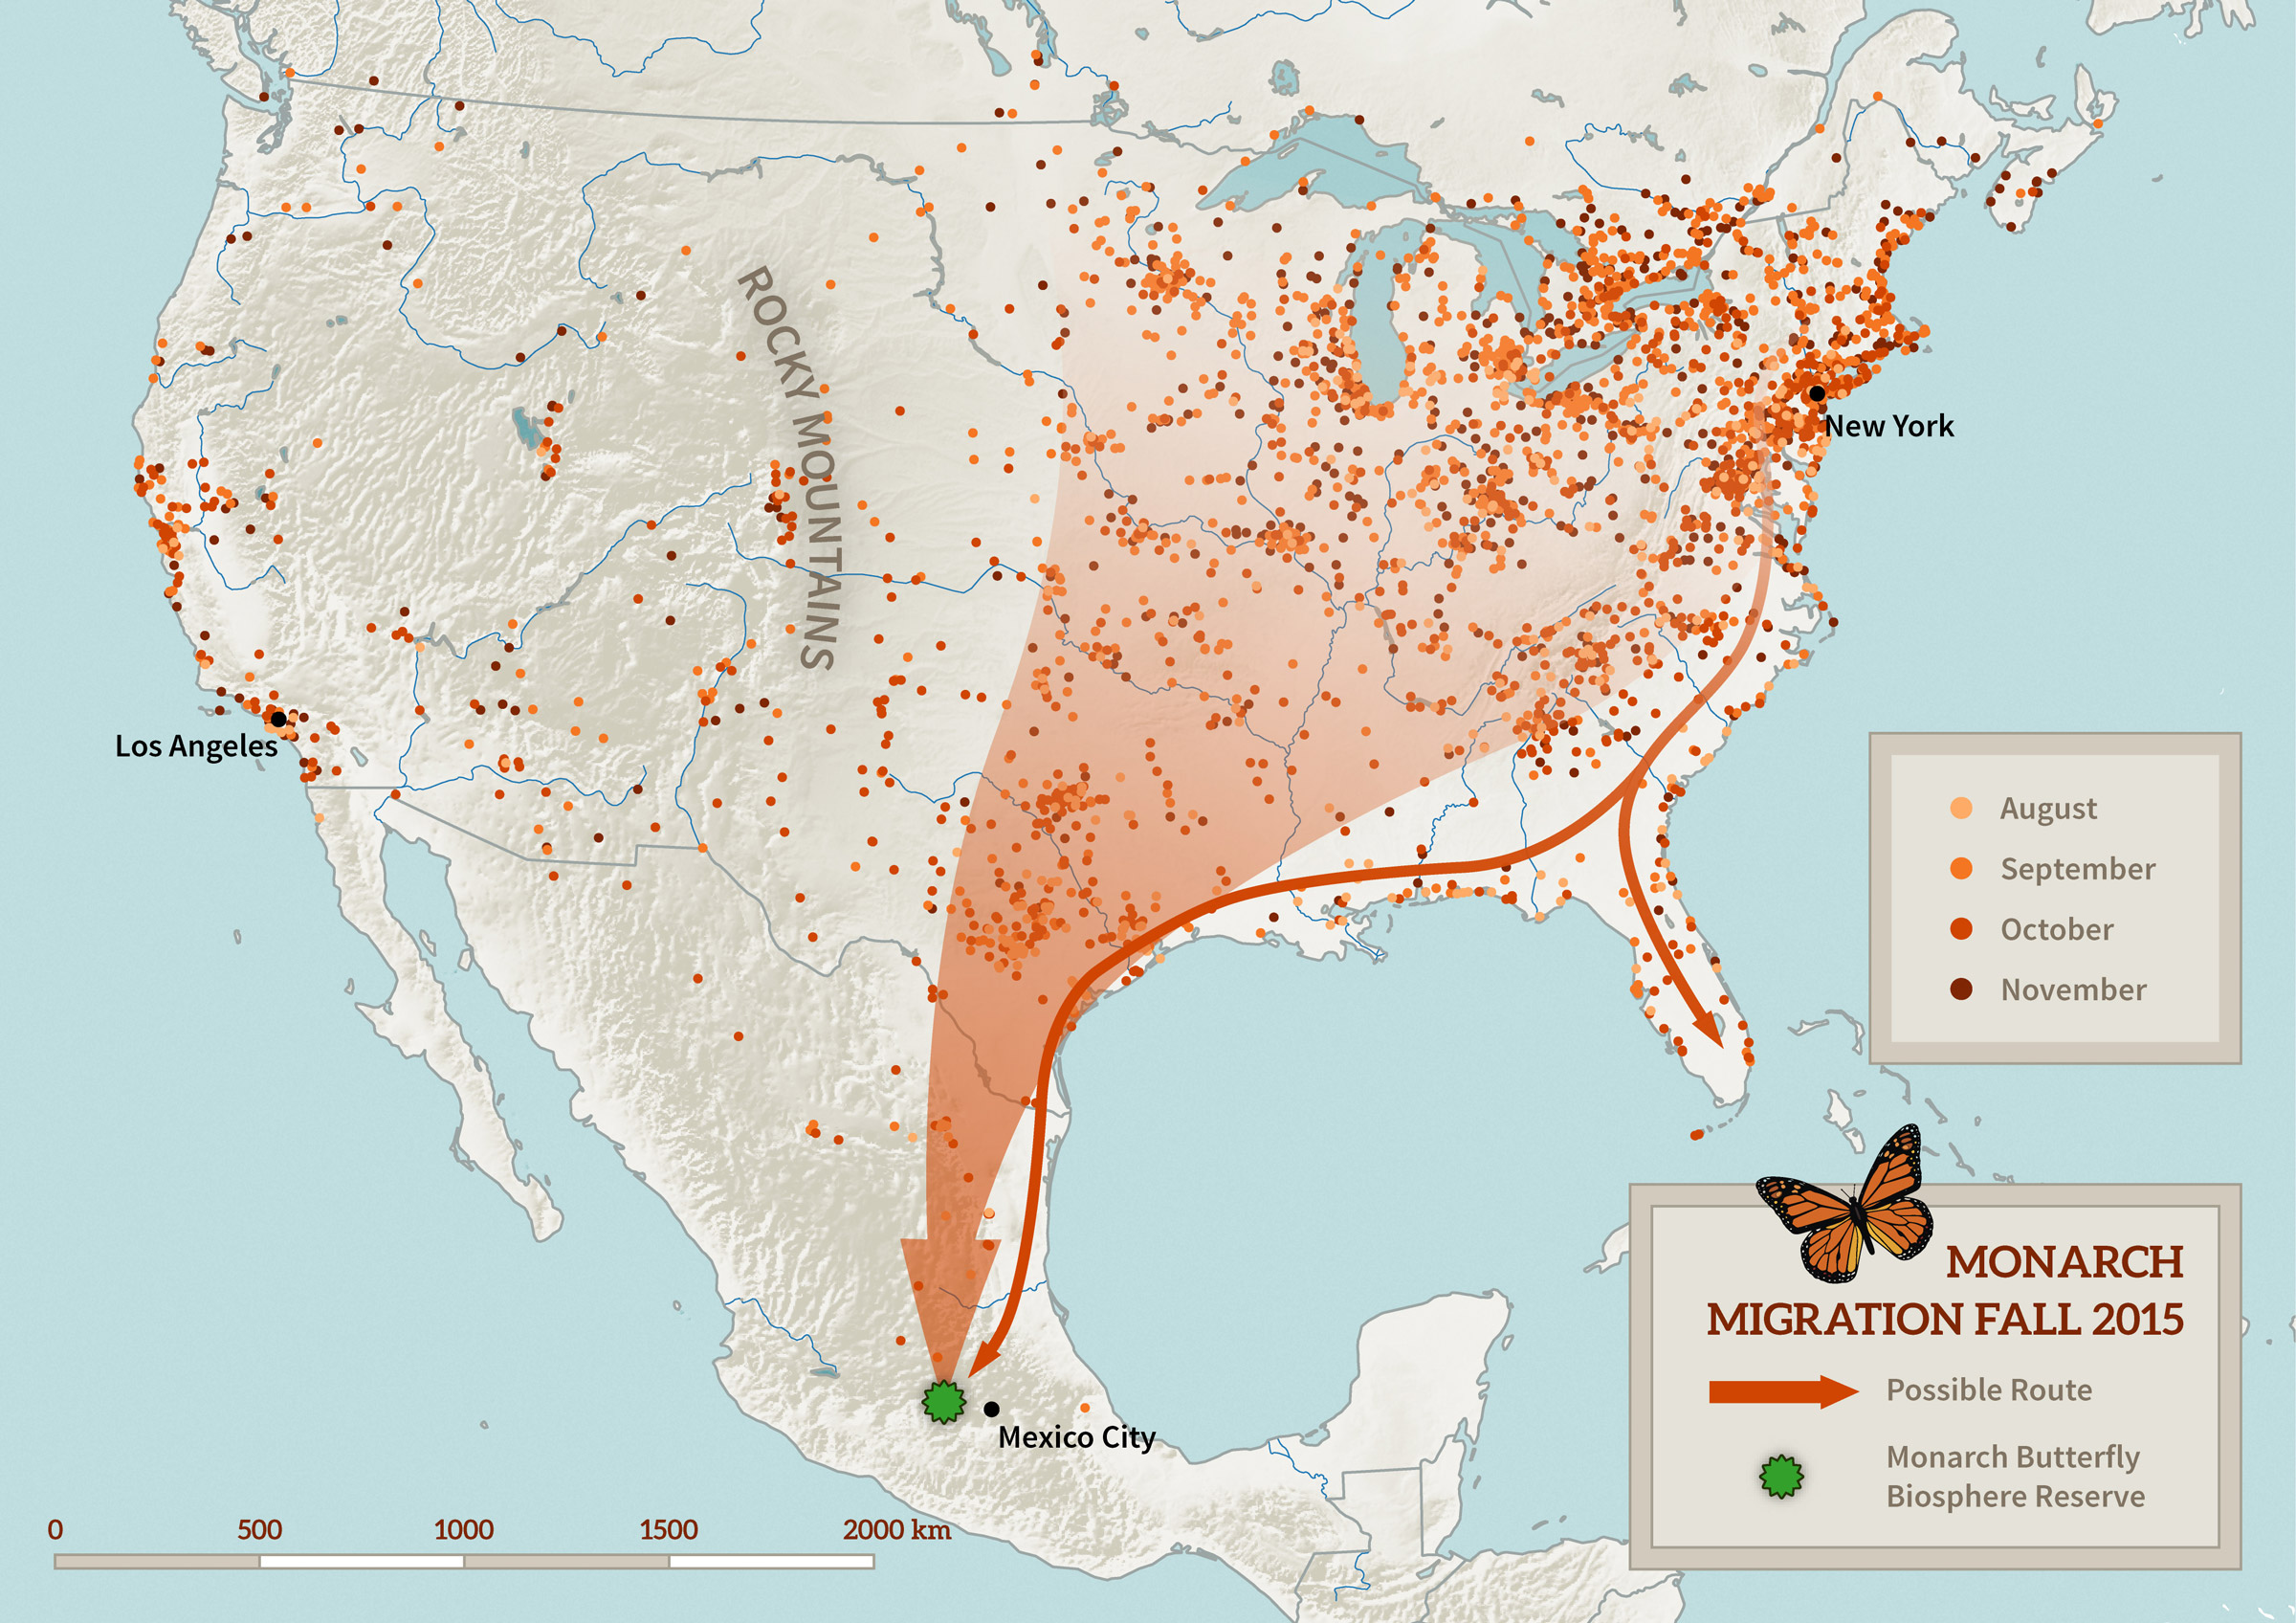 Monarch Migration Fall